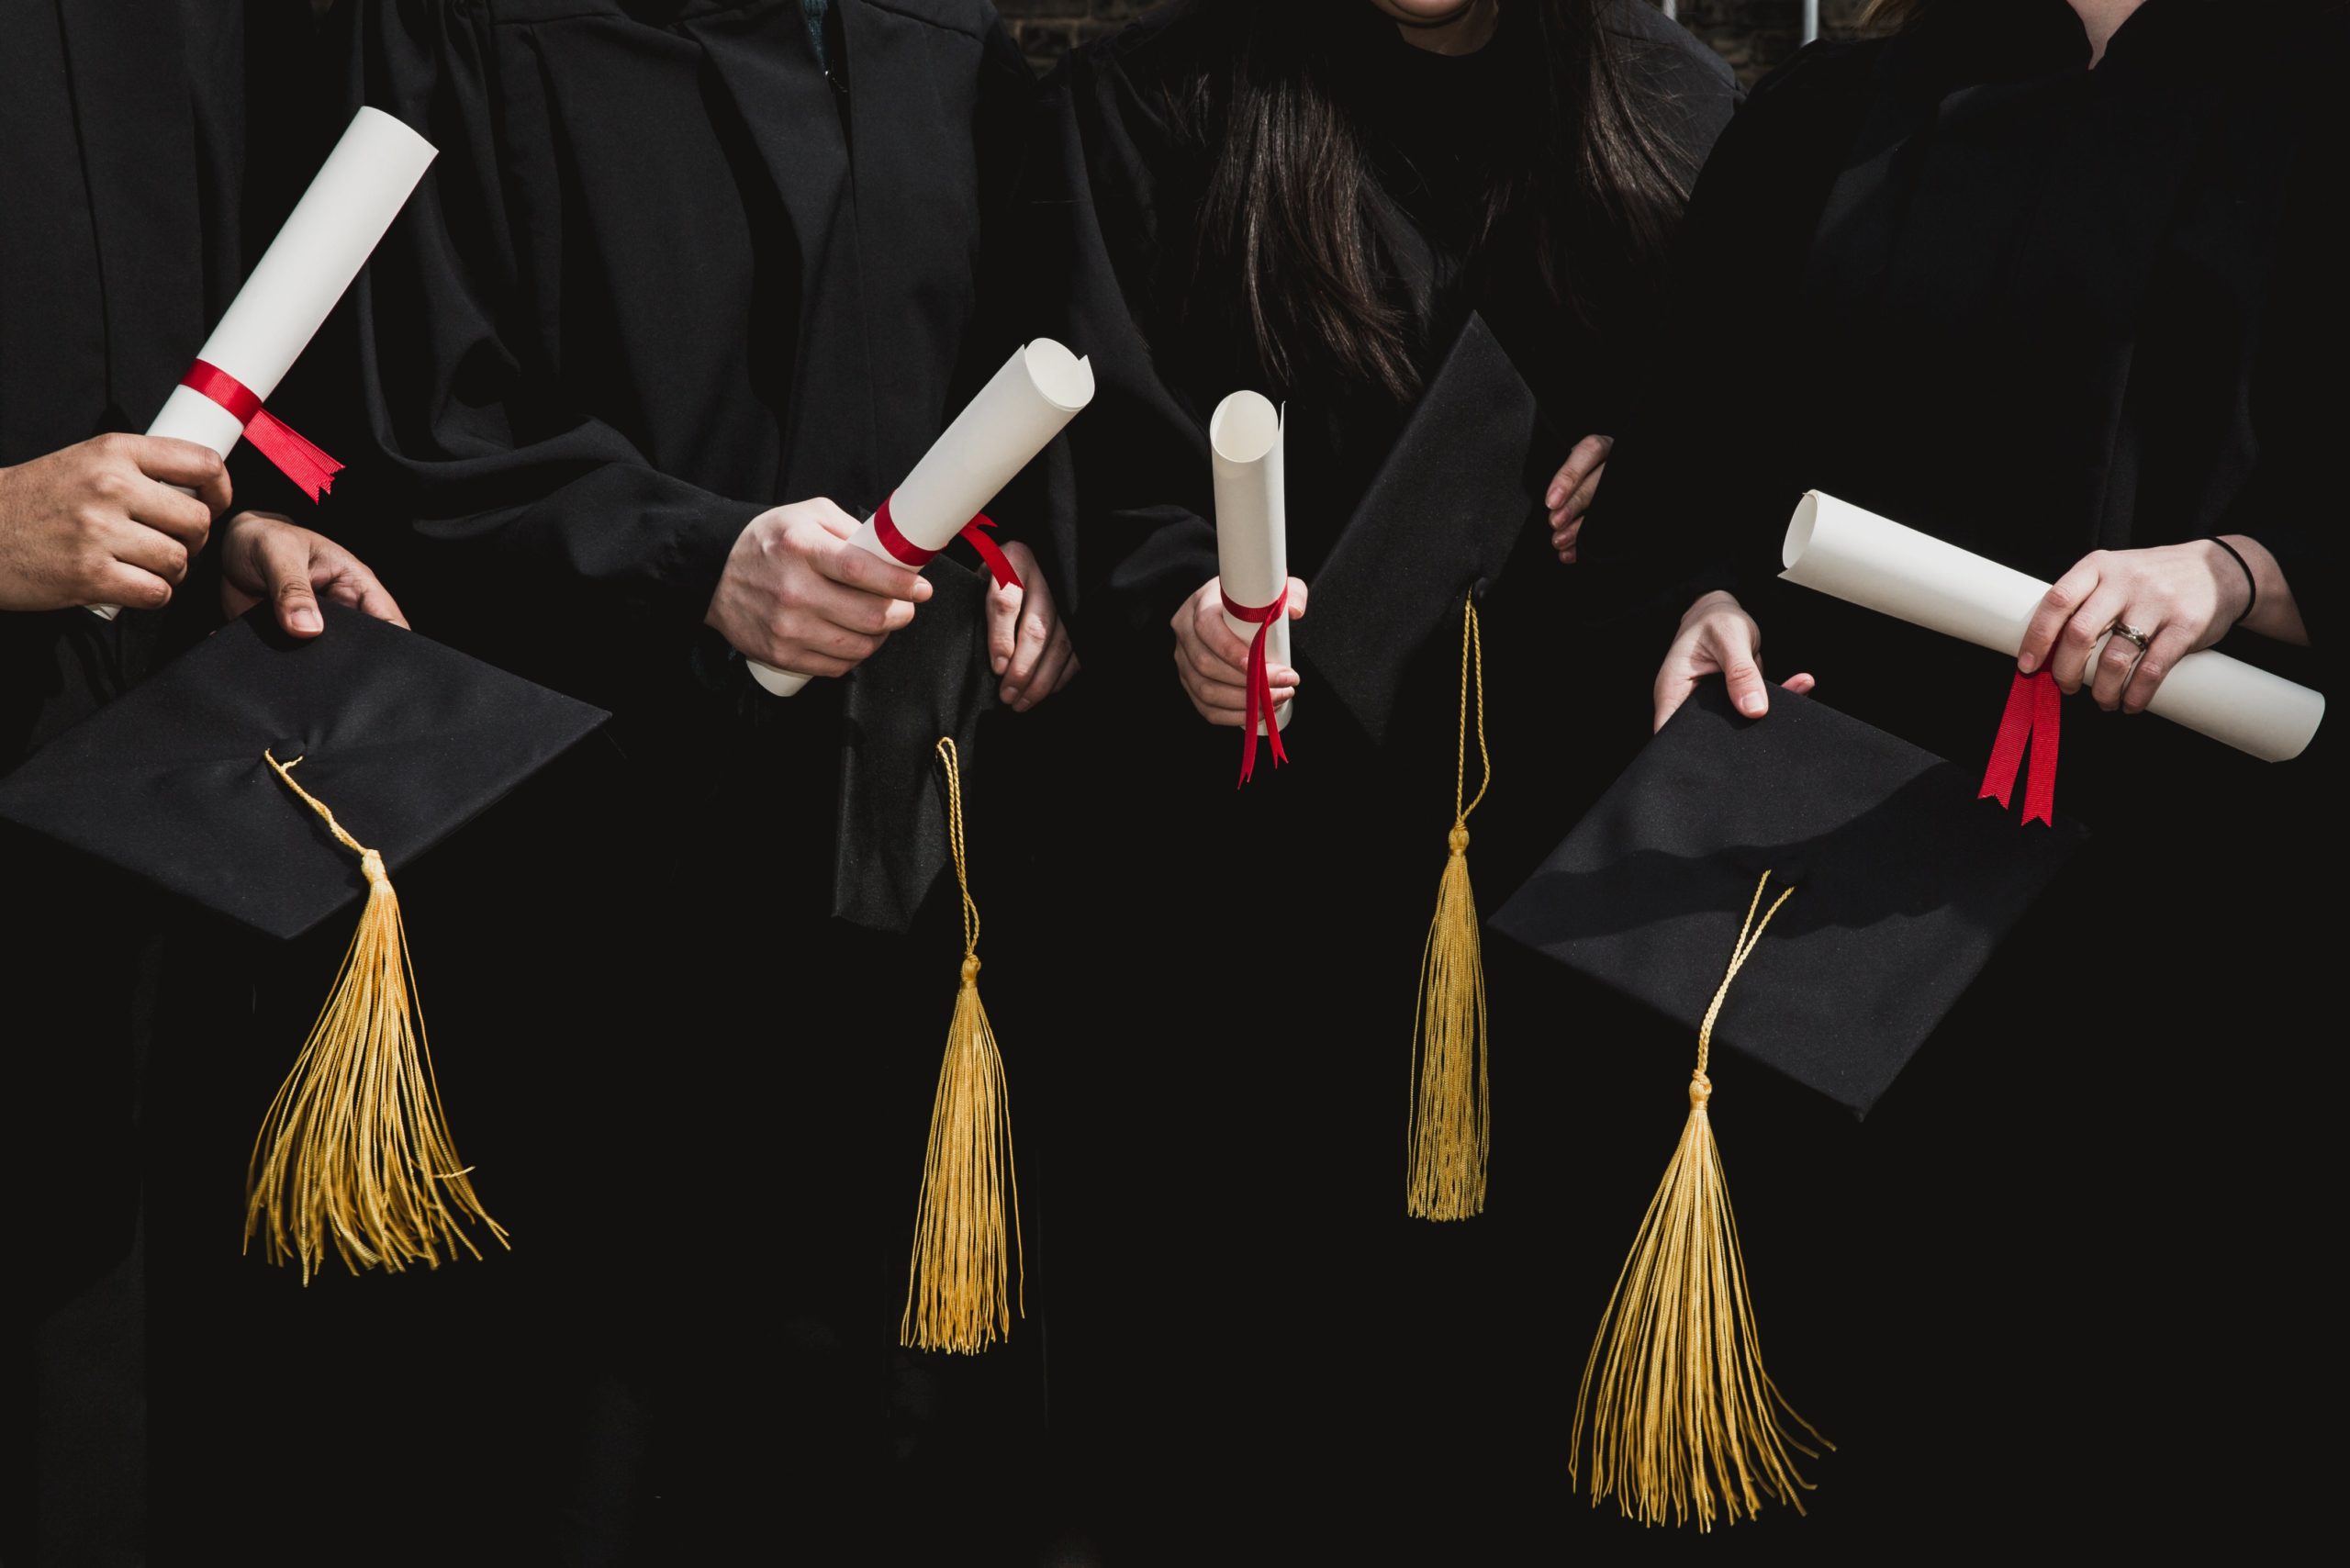 four-grad-students-caps-and-diplomas